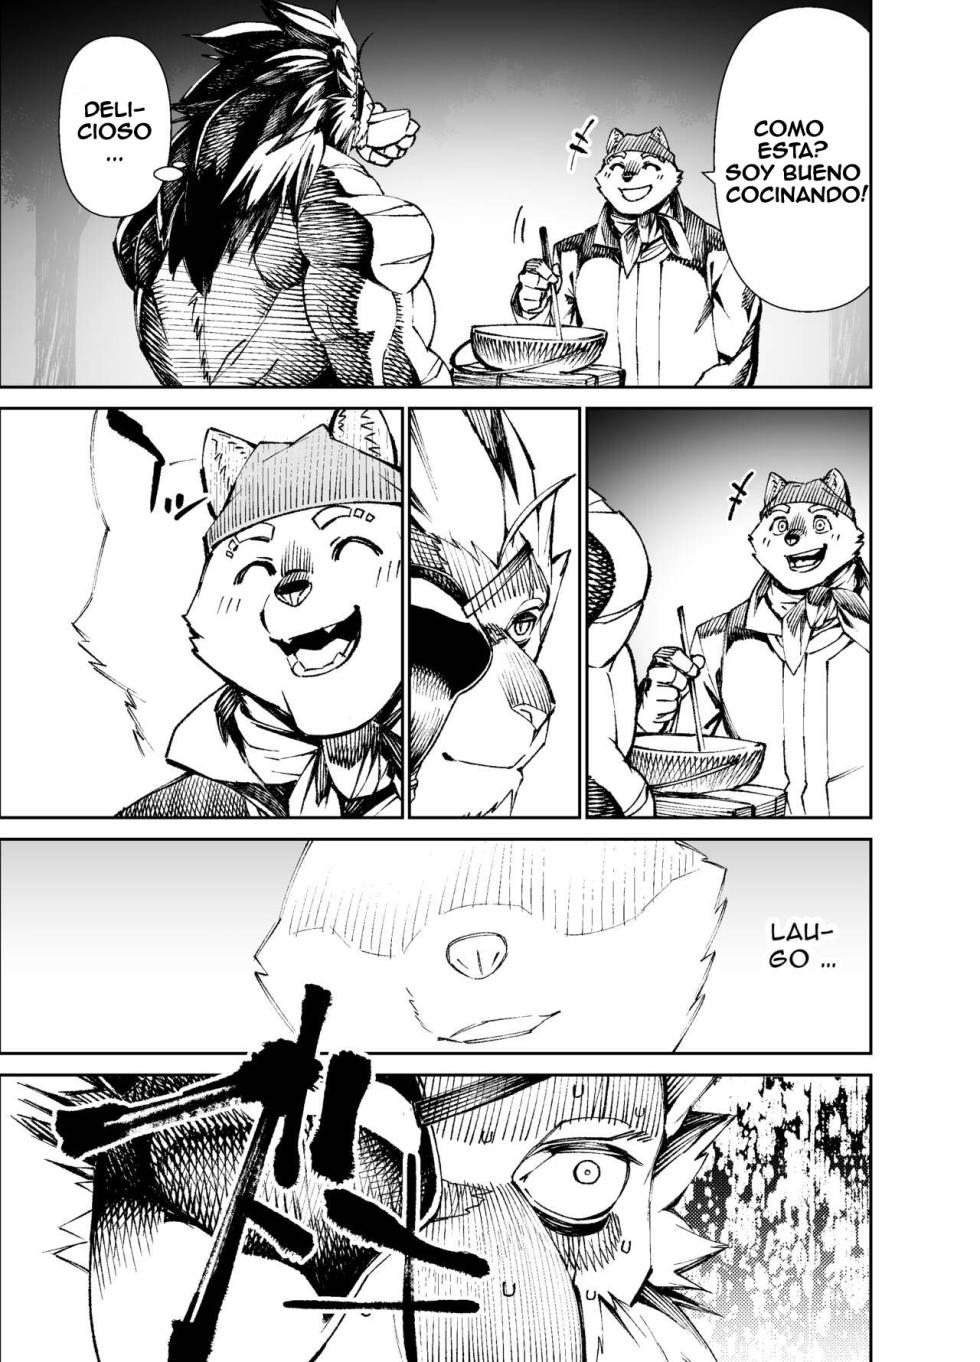 [Mennsuke] Manga 02 - Parts 1 to 8 [Español] (Ongoing) - Page 6